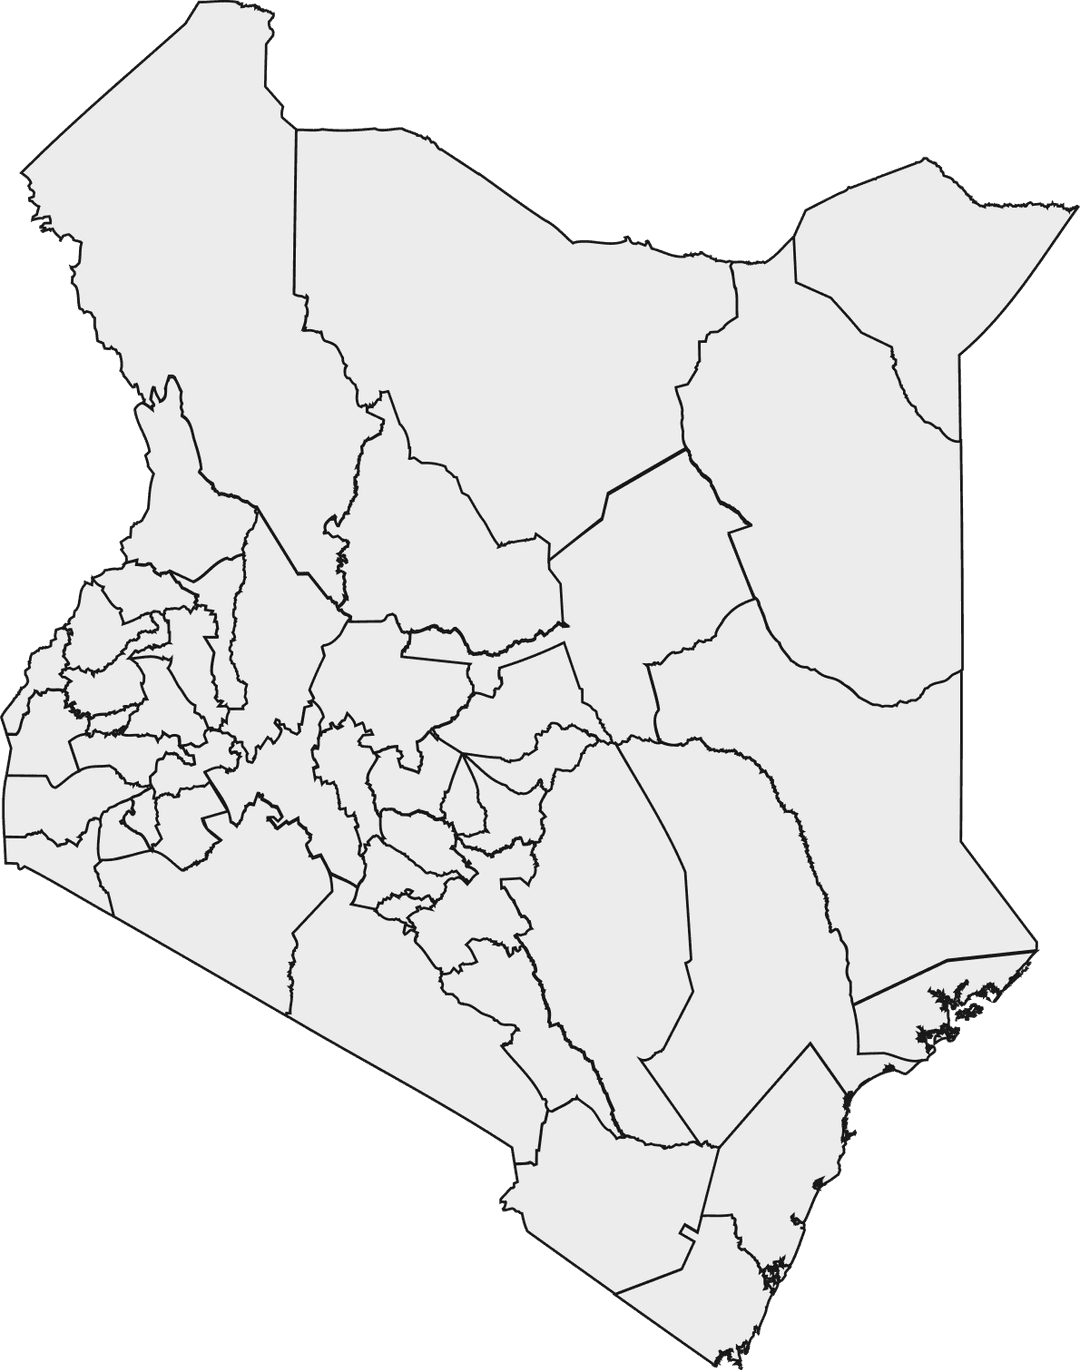 map of Kenya